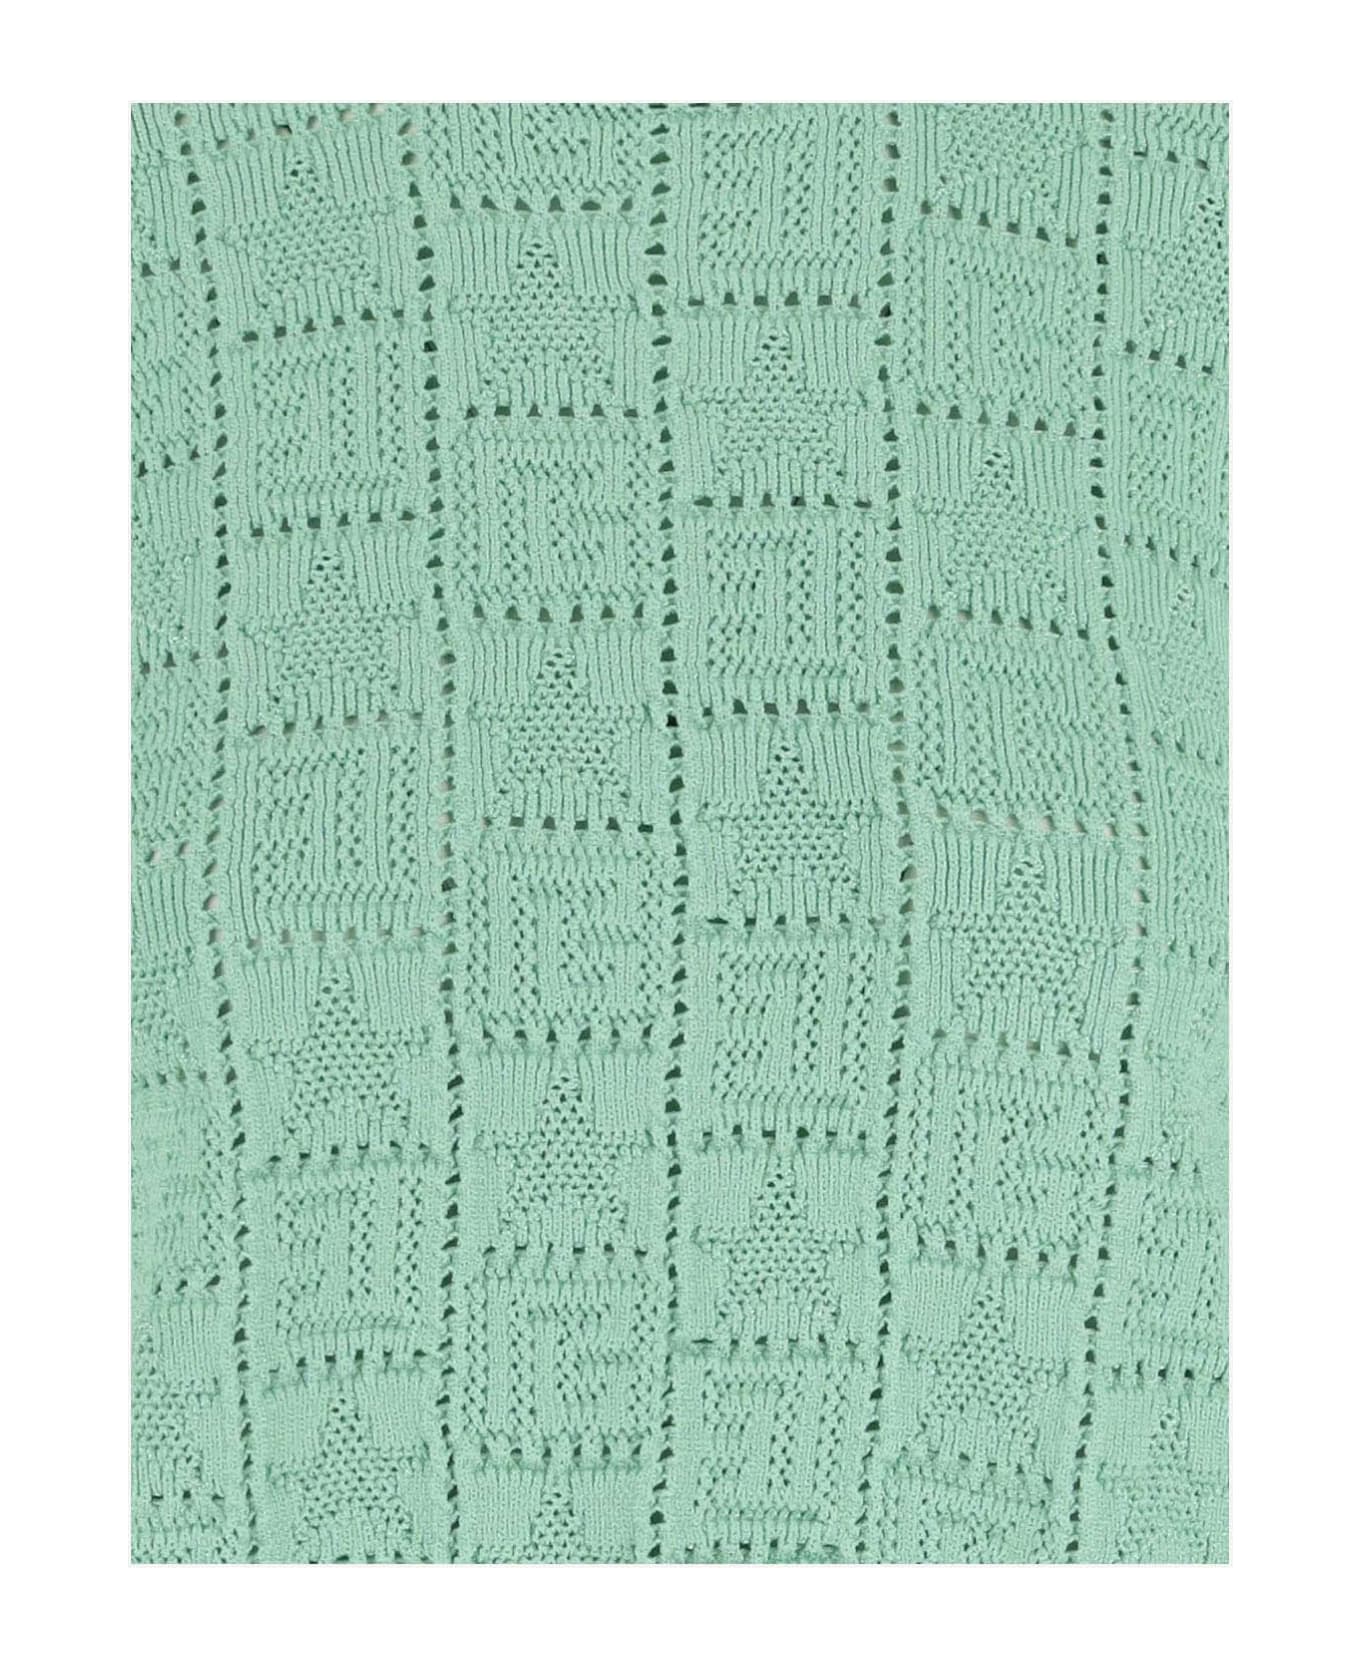 Balmain Monogrammed Knit Pullover - Green